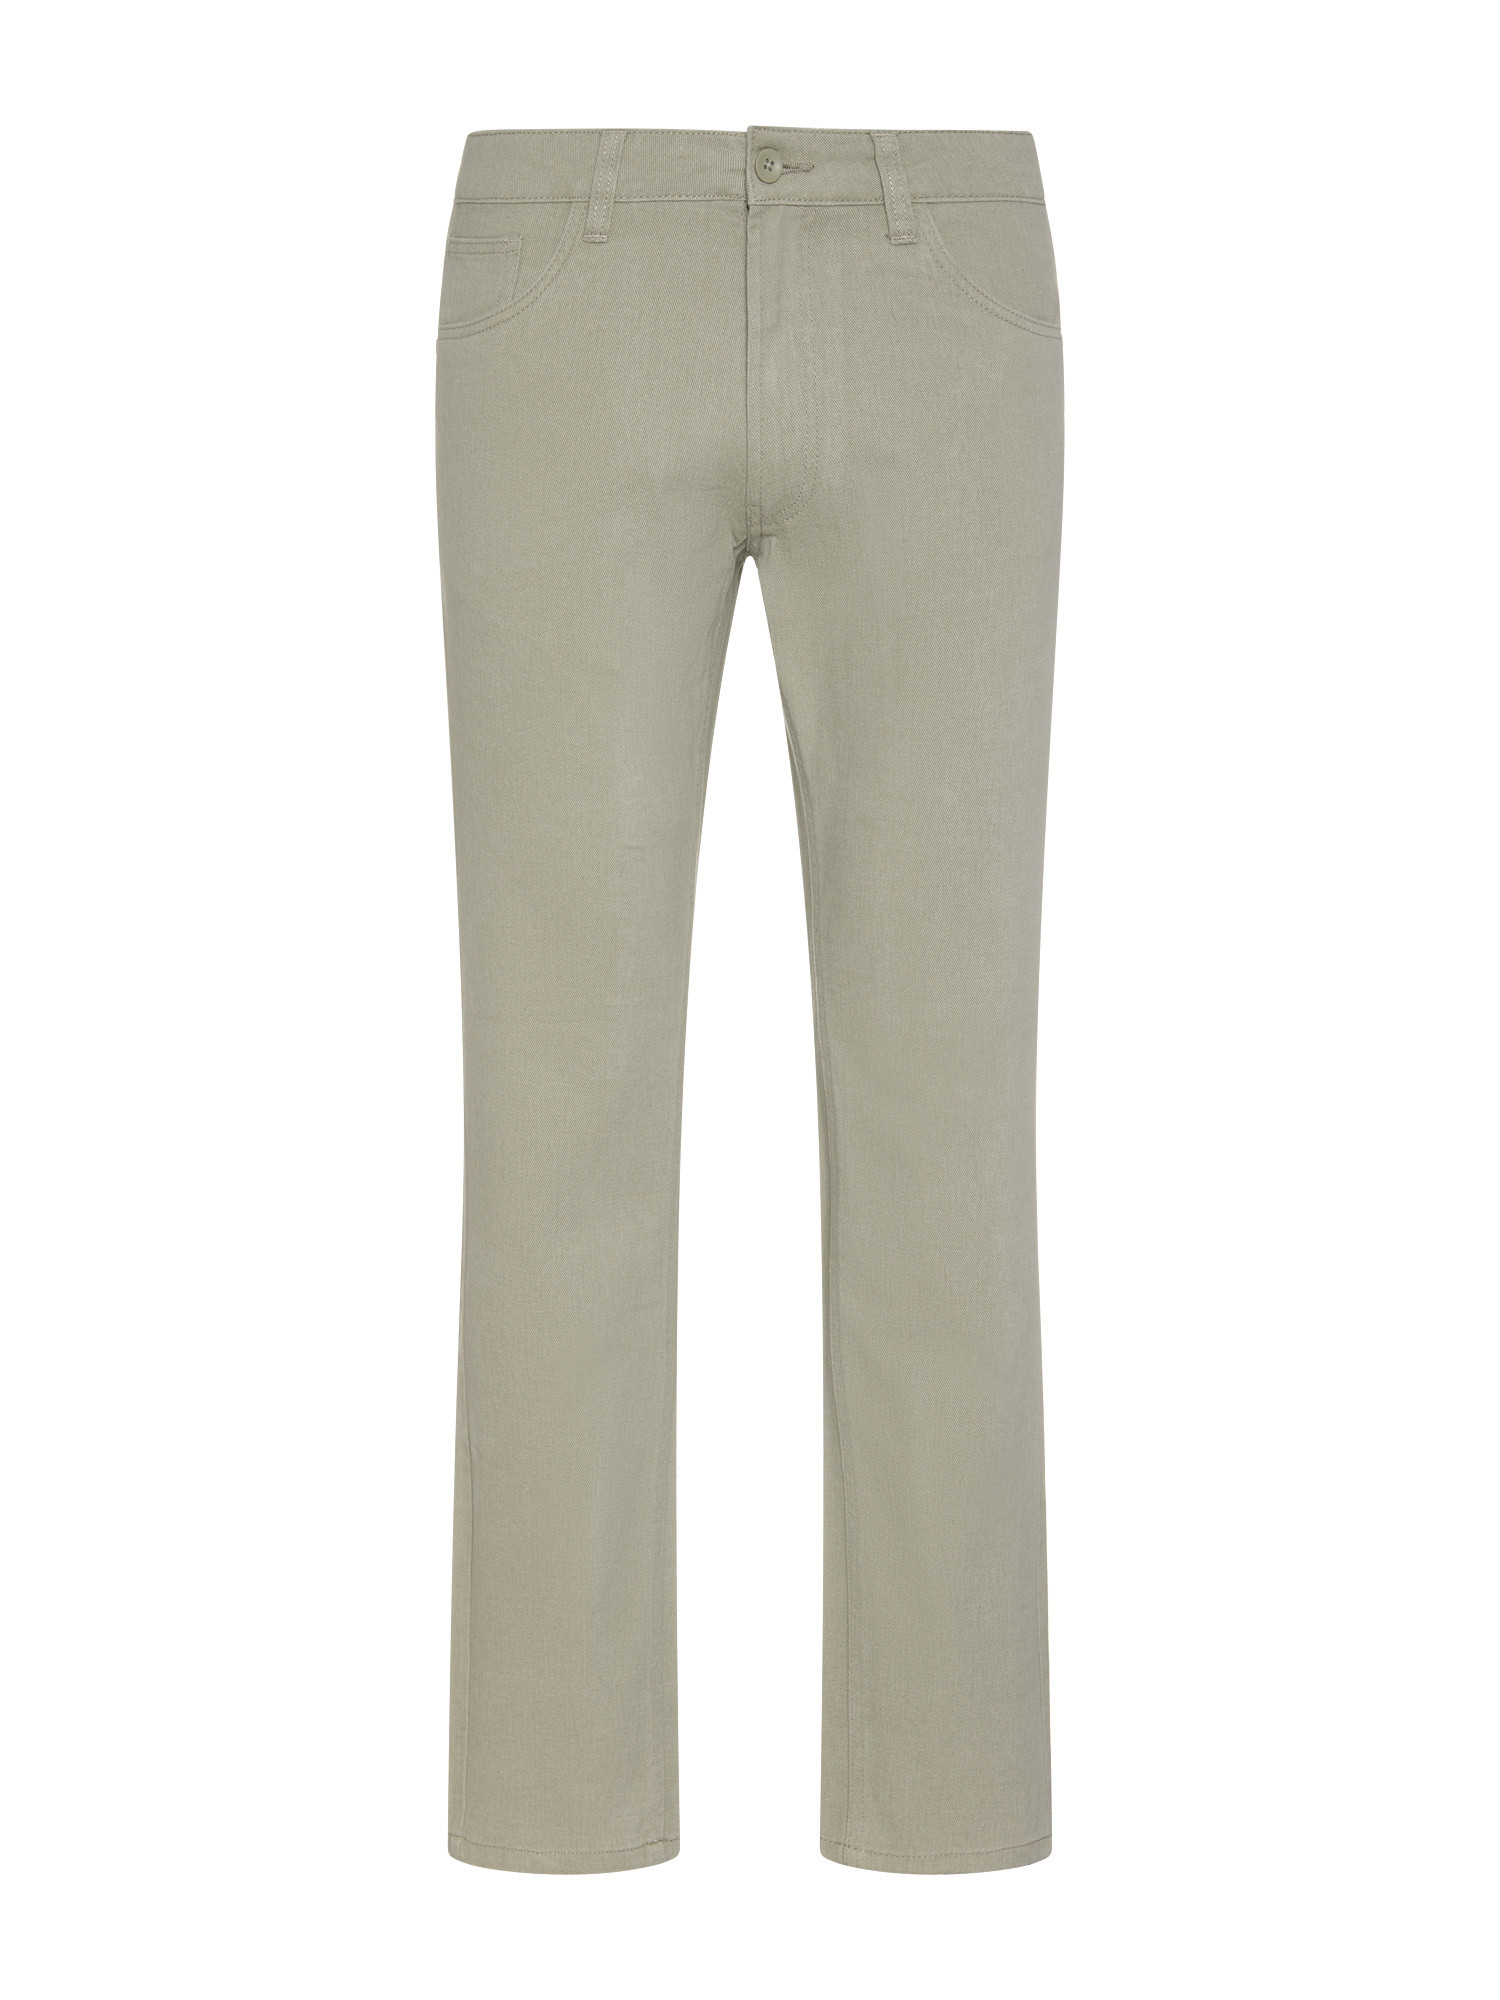 JCT - Pantaloni regular fit cinque tasche in puro cotone, Verde salvia, large image number 0